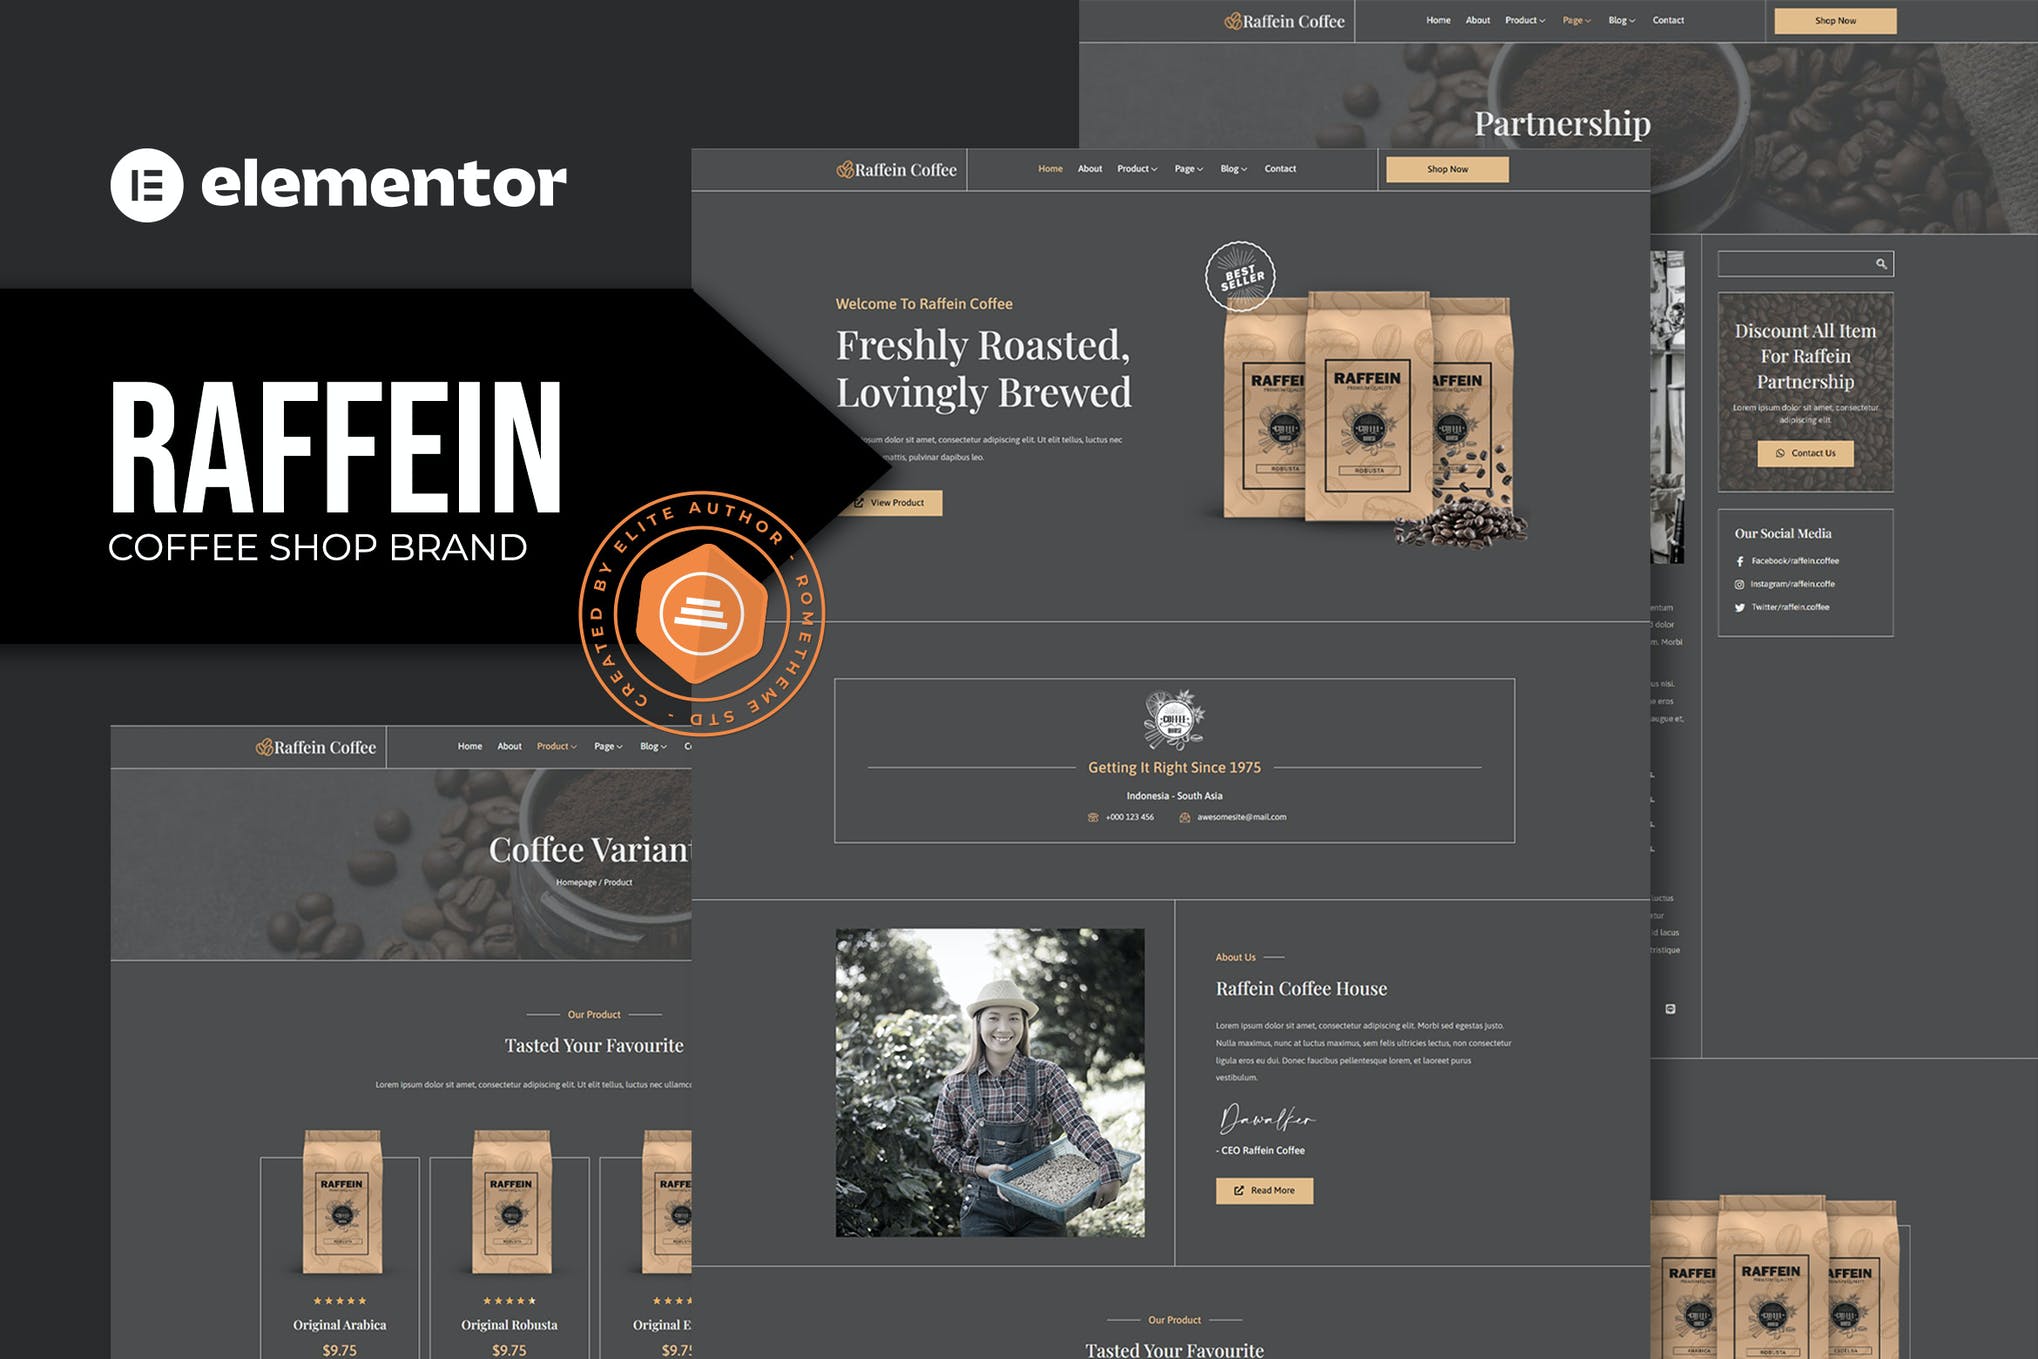 Raffein - Coffee Shop Brand Elementor Template Kit